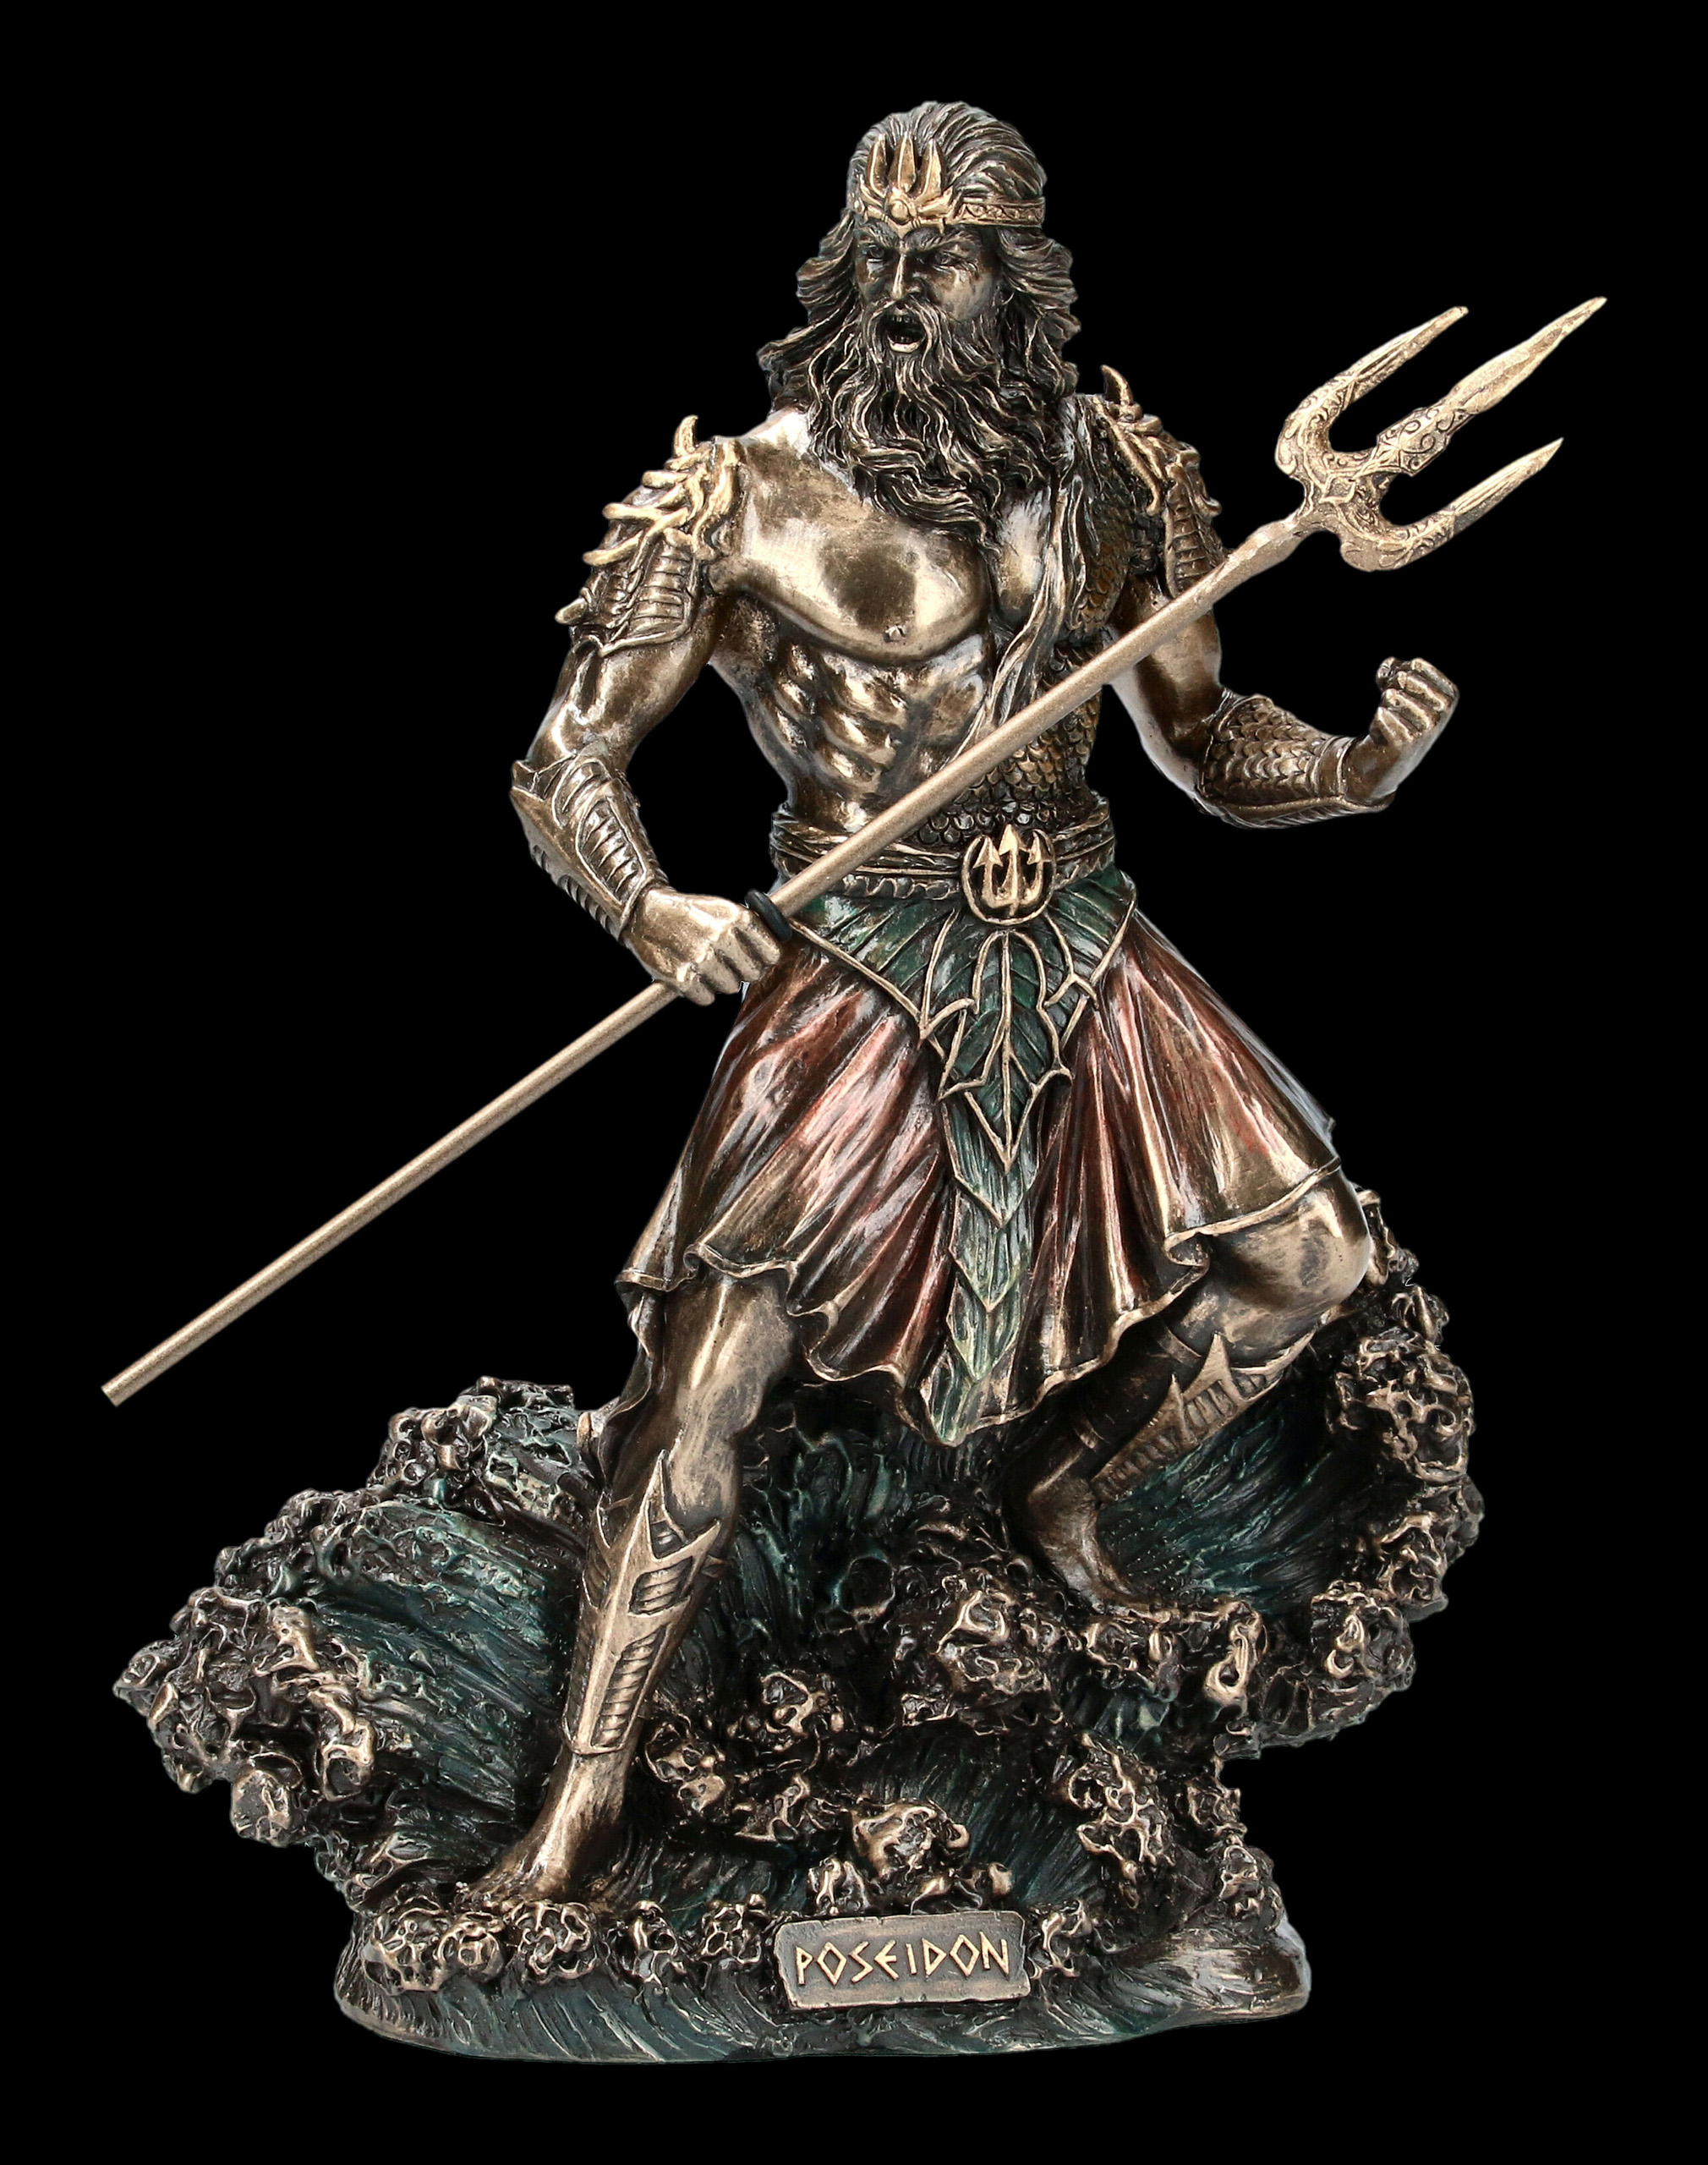 Poseidon Figur erhebt sich aus den Wellen Veronese Badezimmer Deko Bad Gott